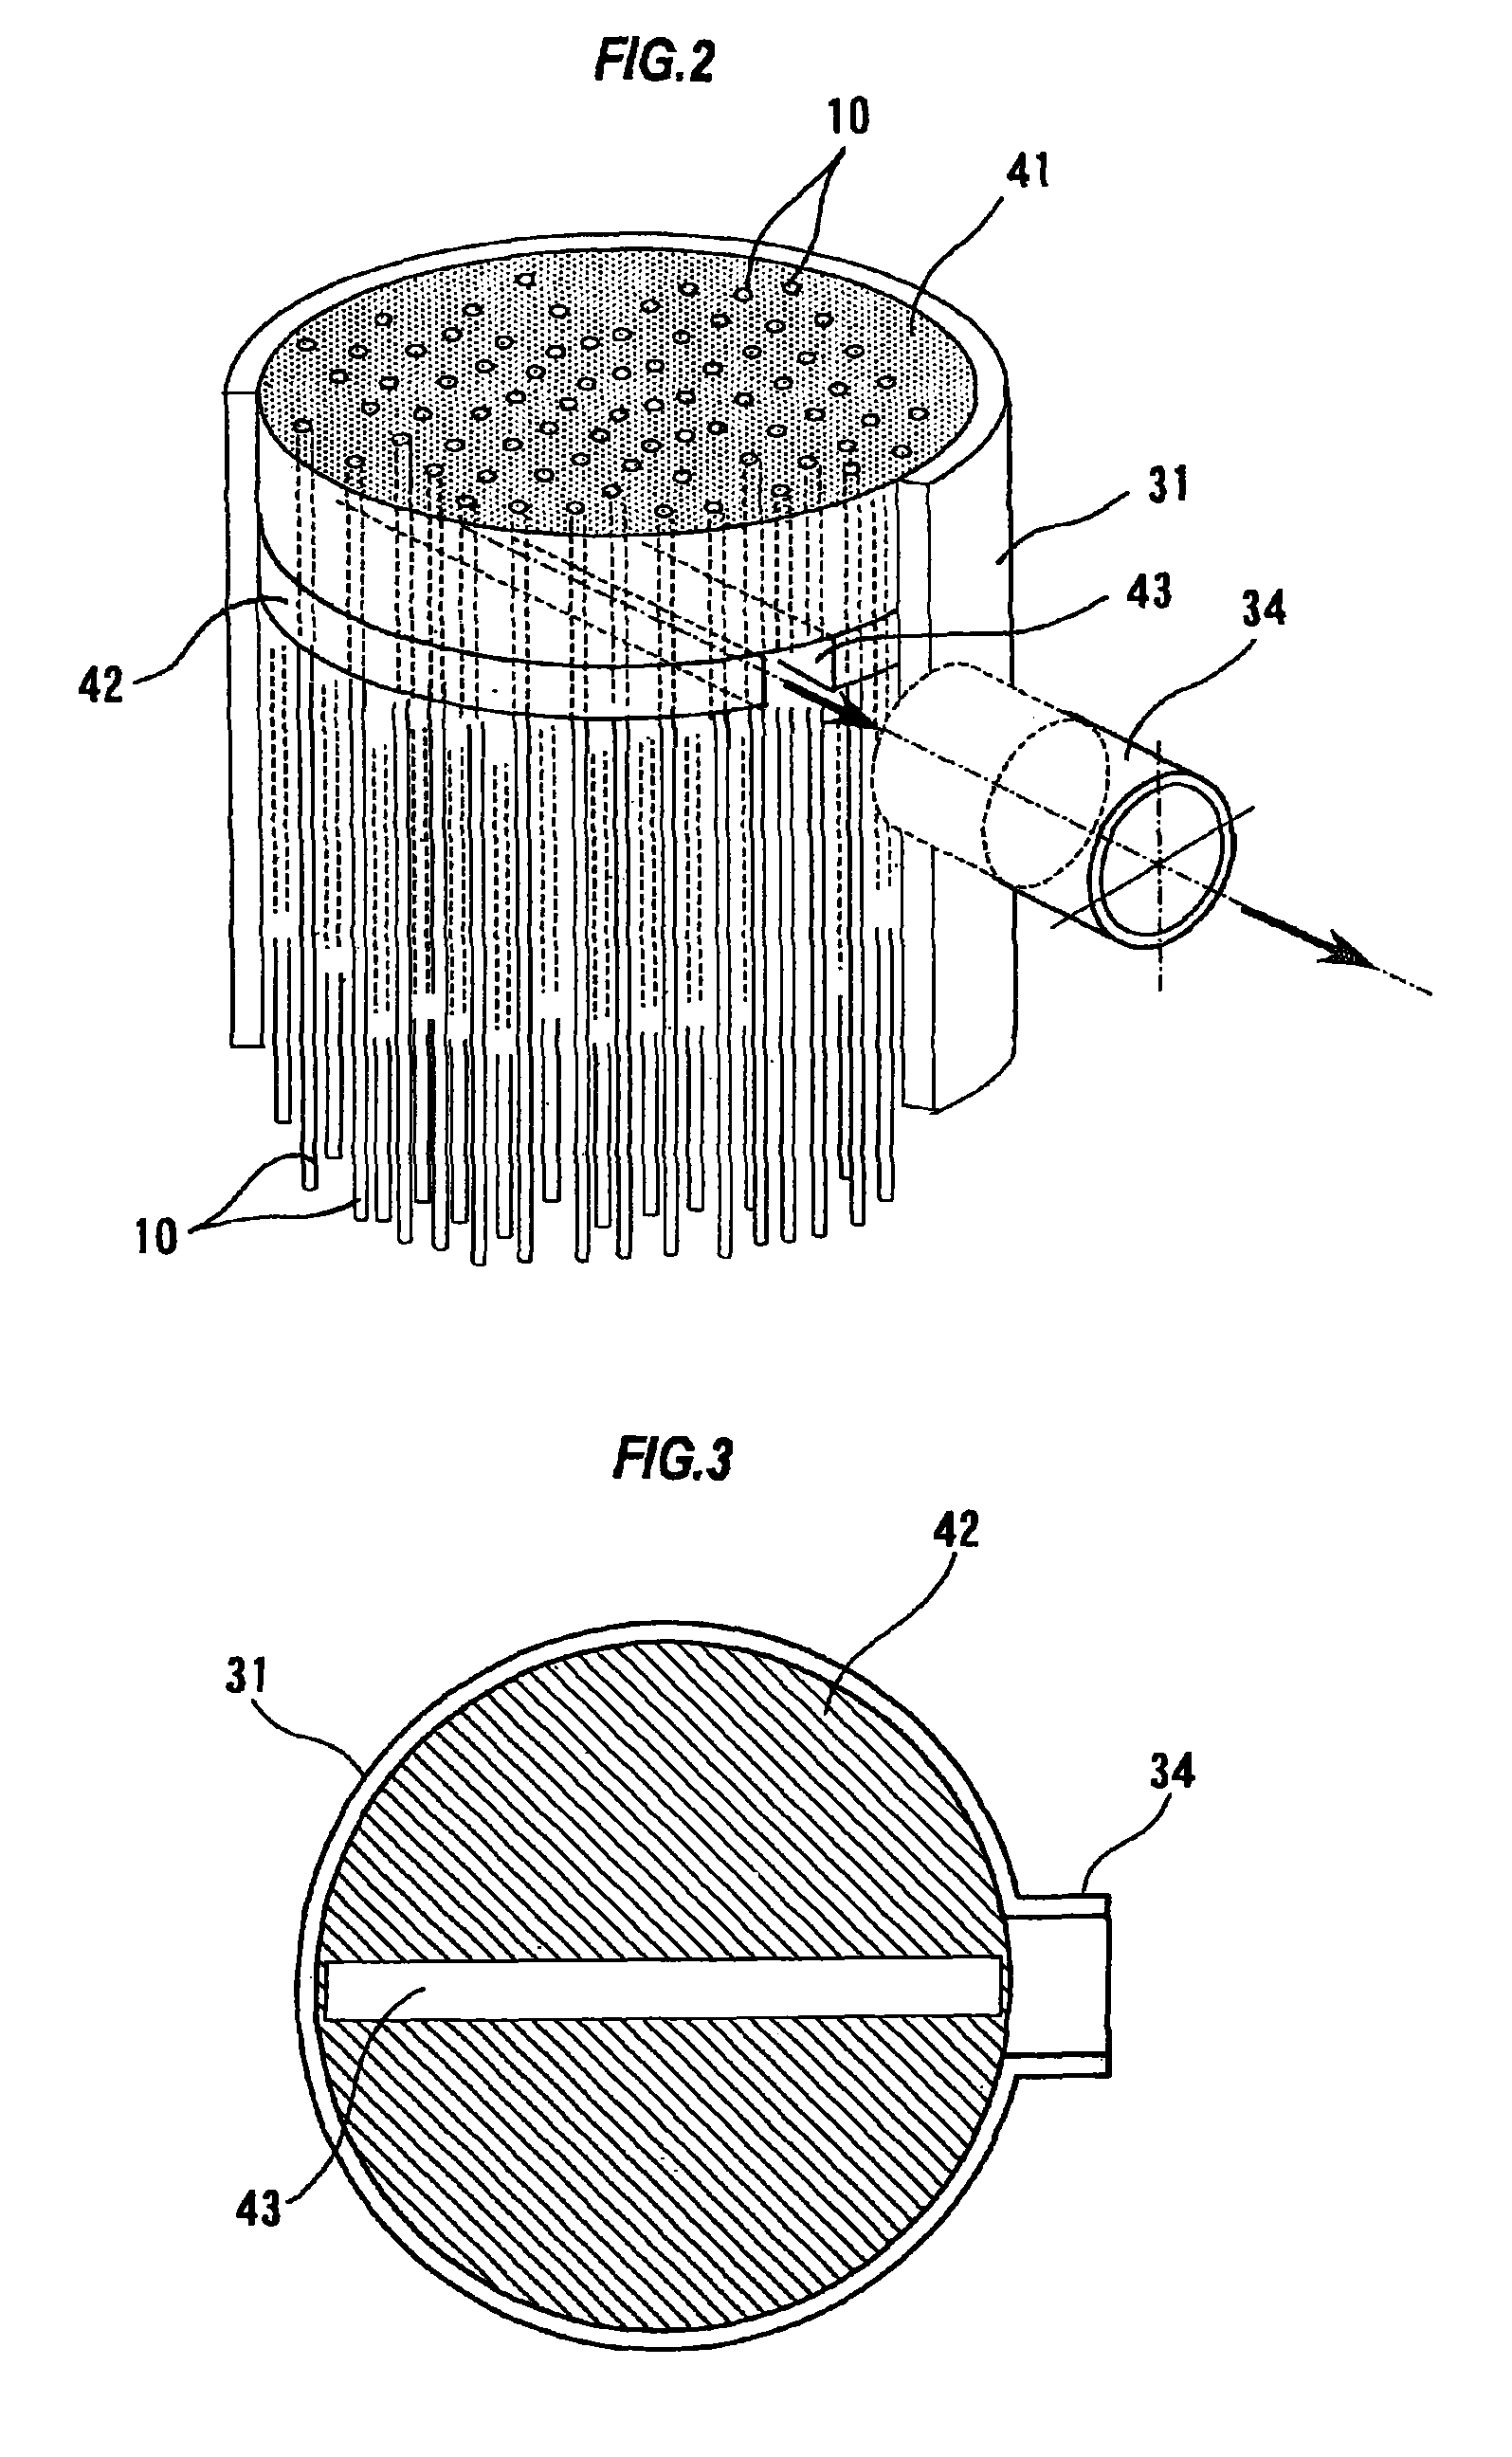 Hollow fiber membrane module